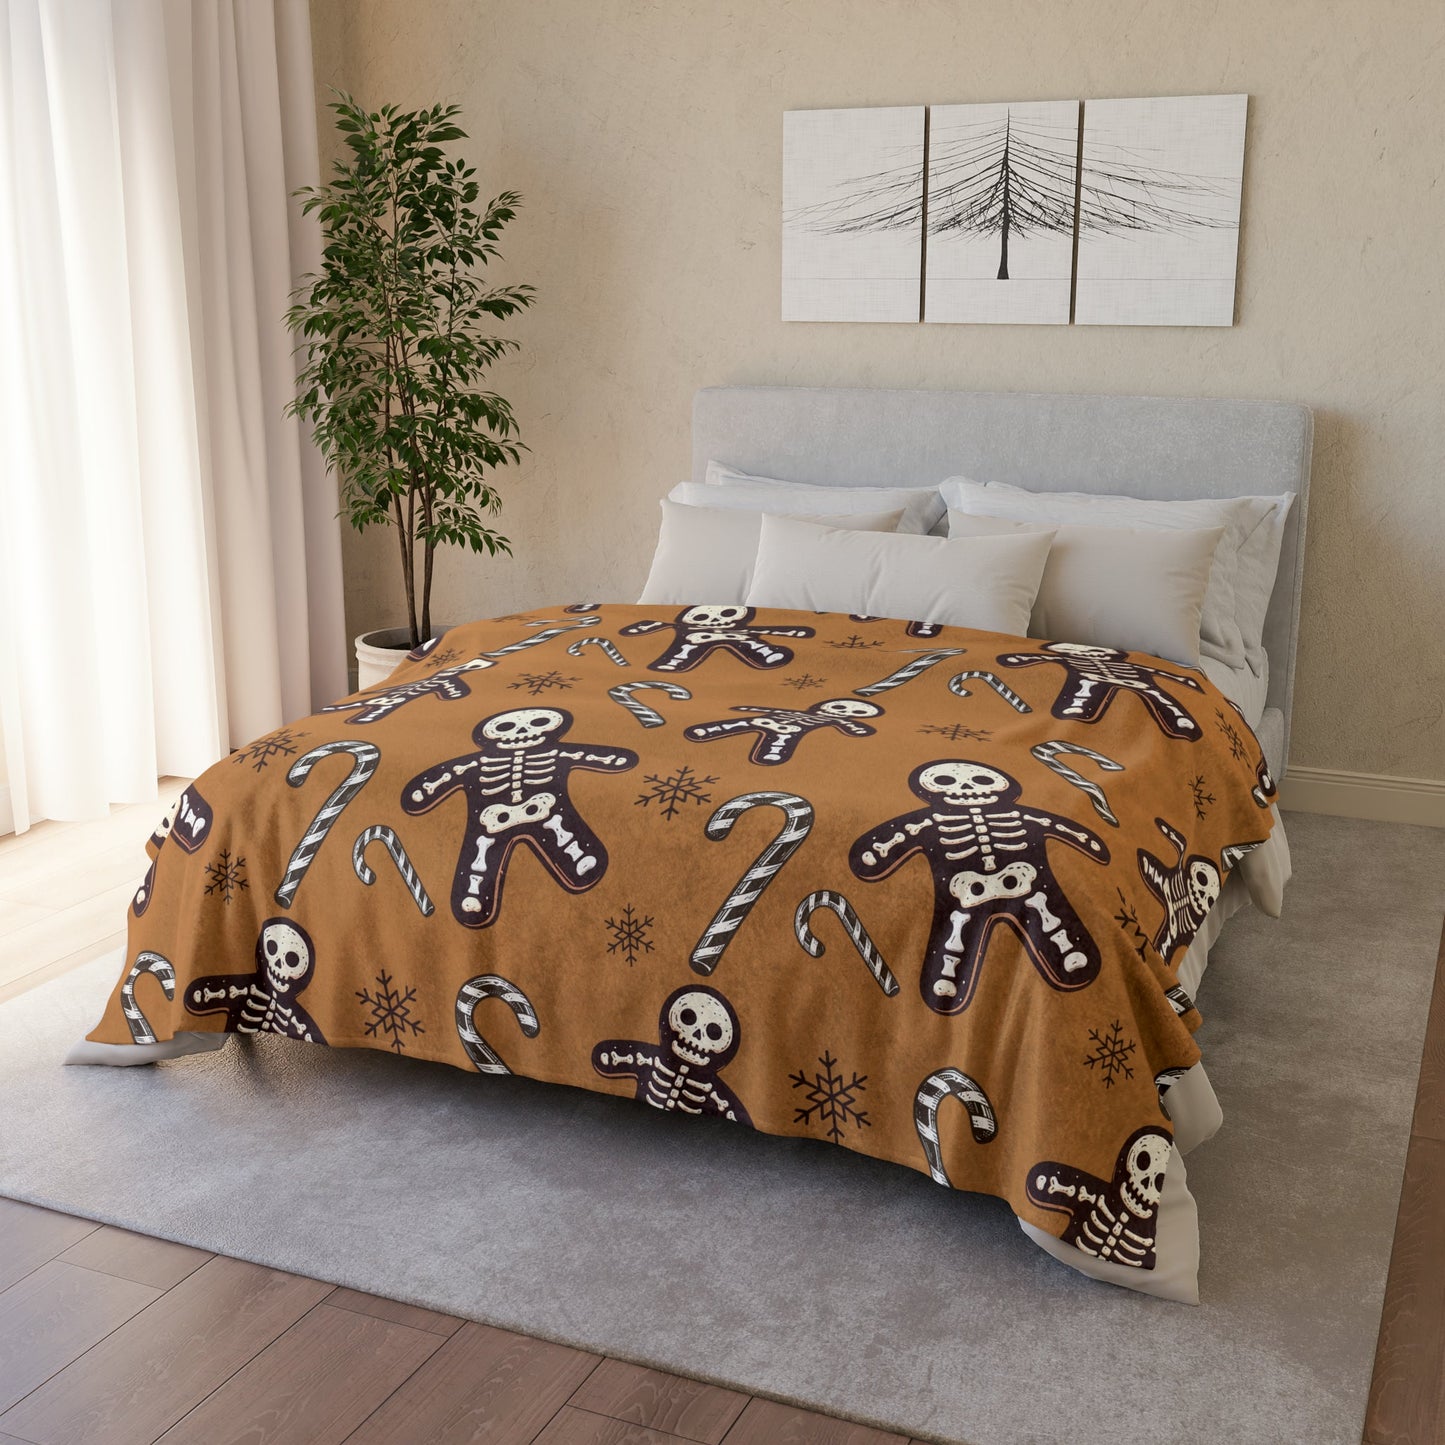 Skeleton Gingerbread Man BlanketHome DecorVTZdesigns60" × 80"BedBeddingblack